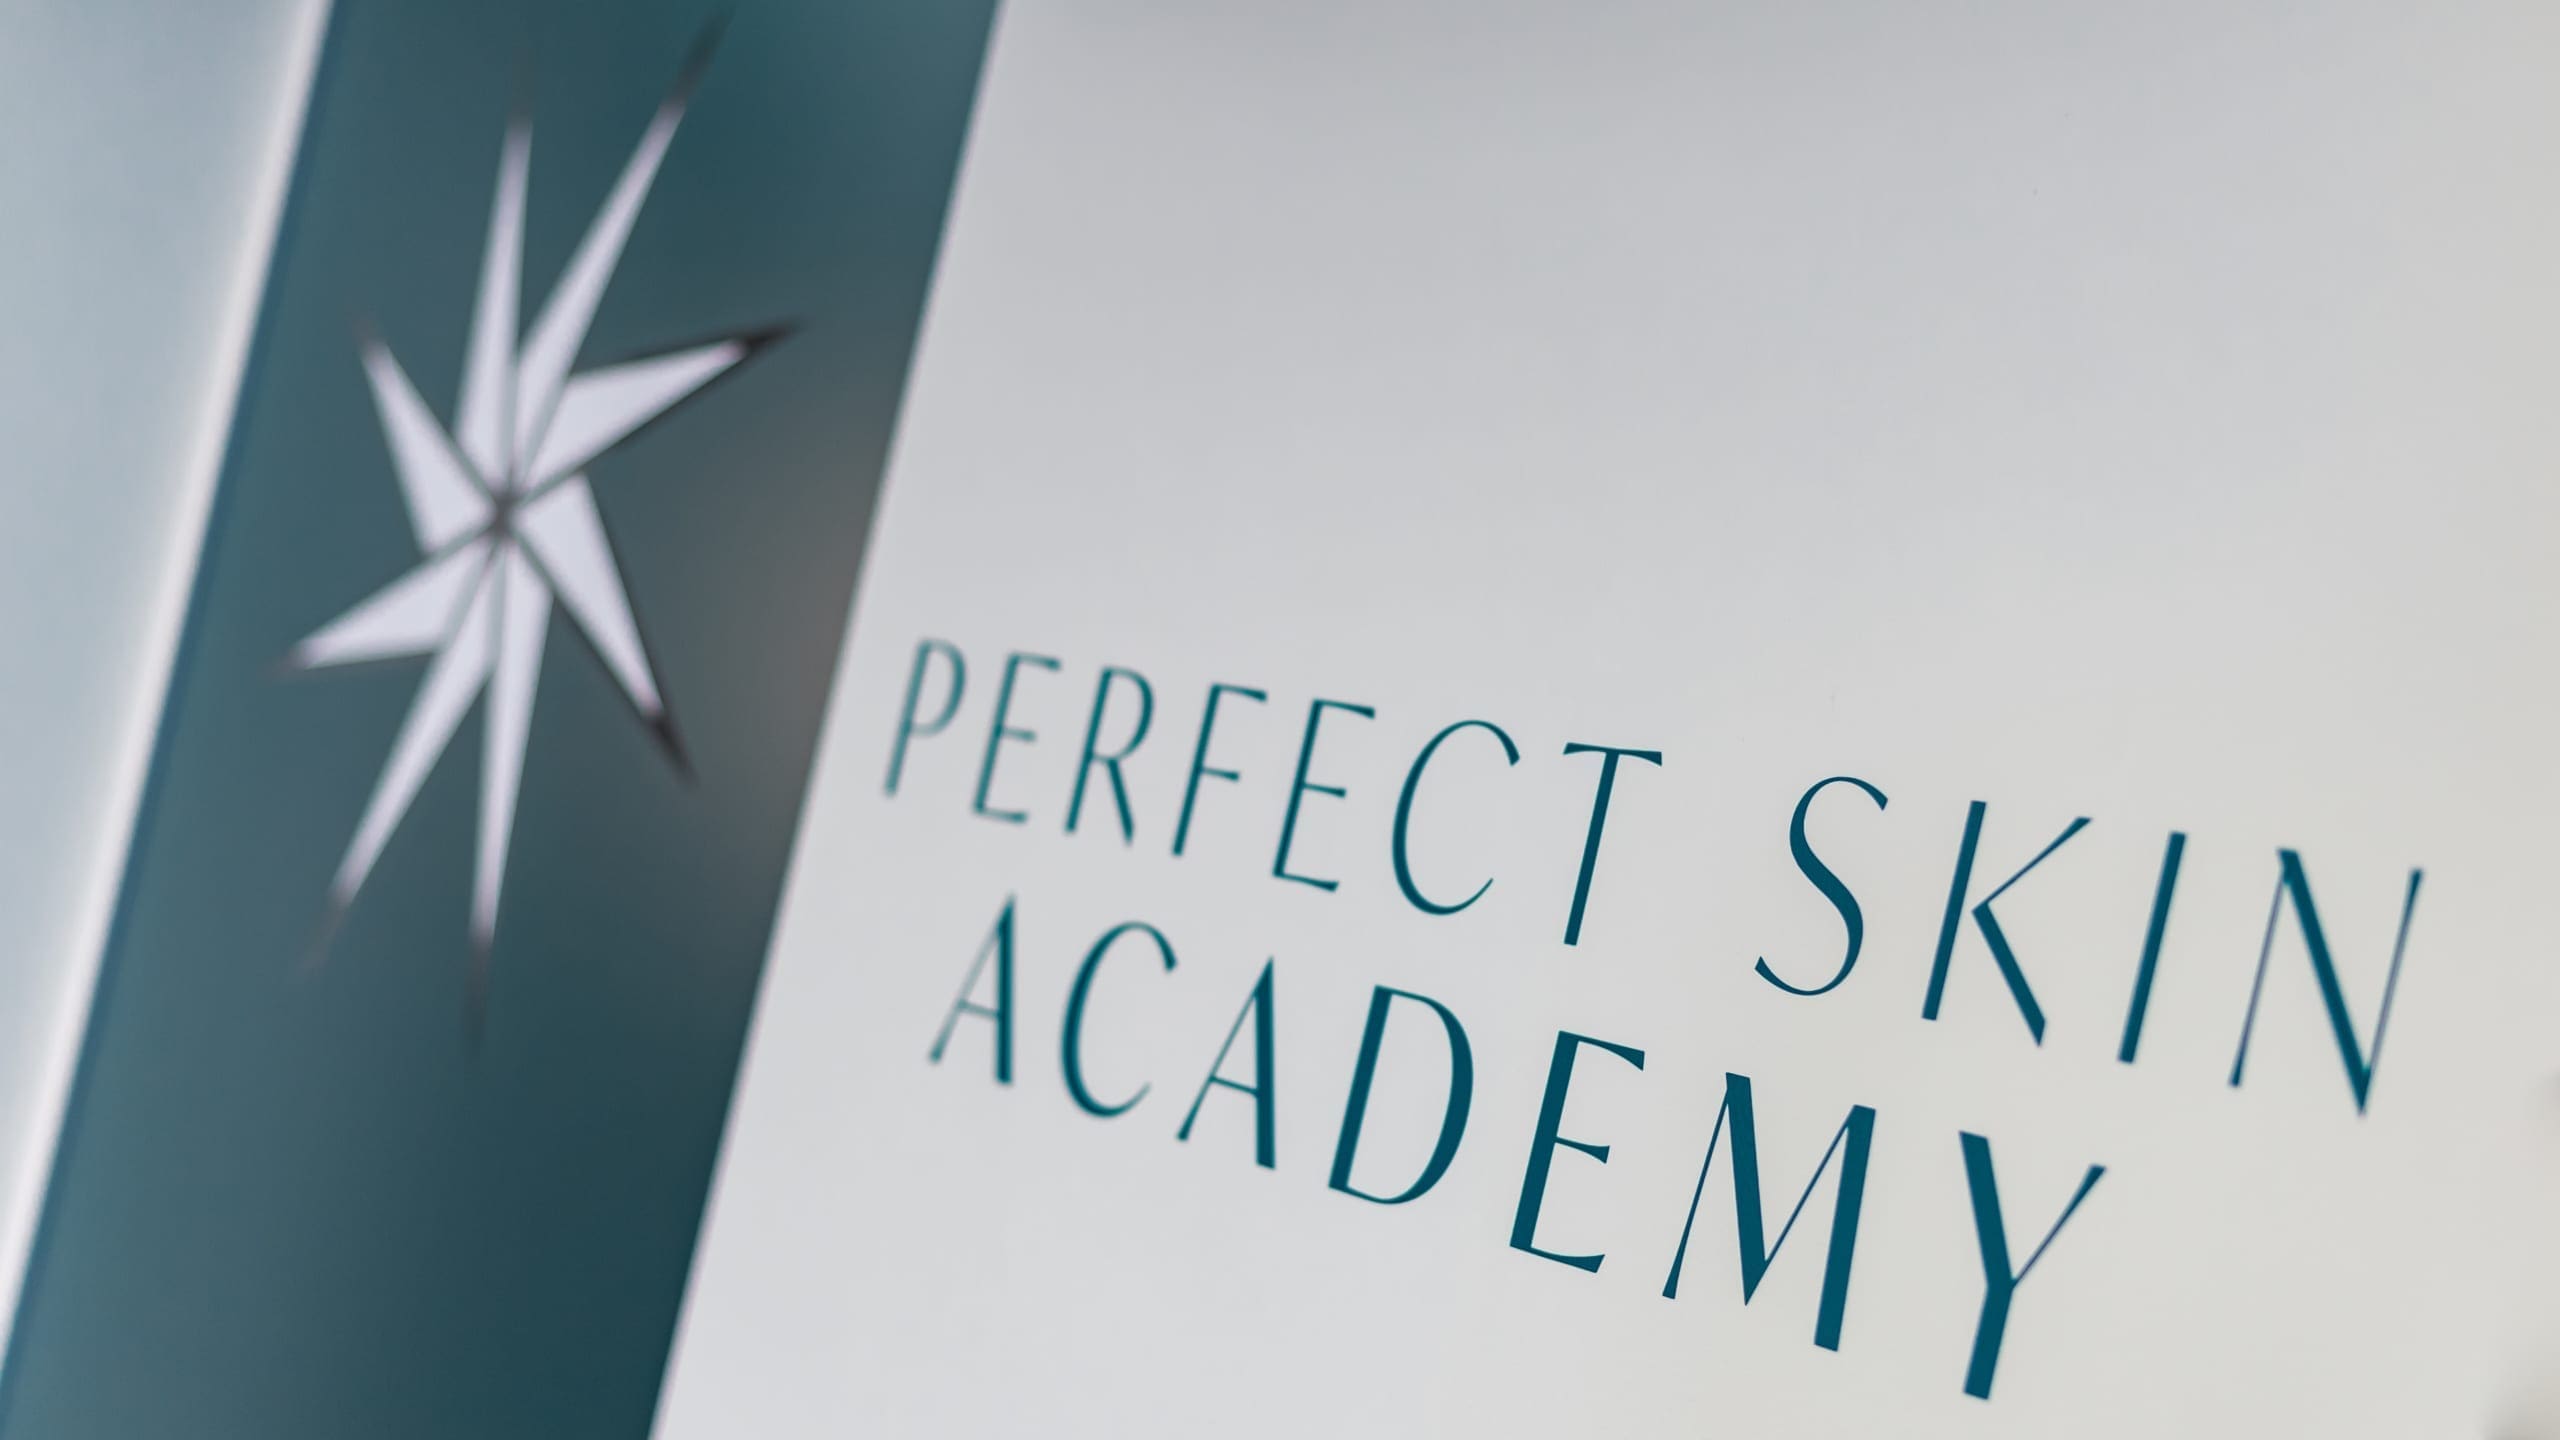 Perfect Skin Academy logo